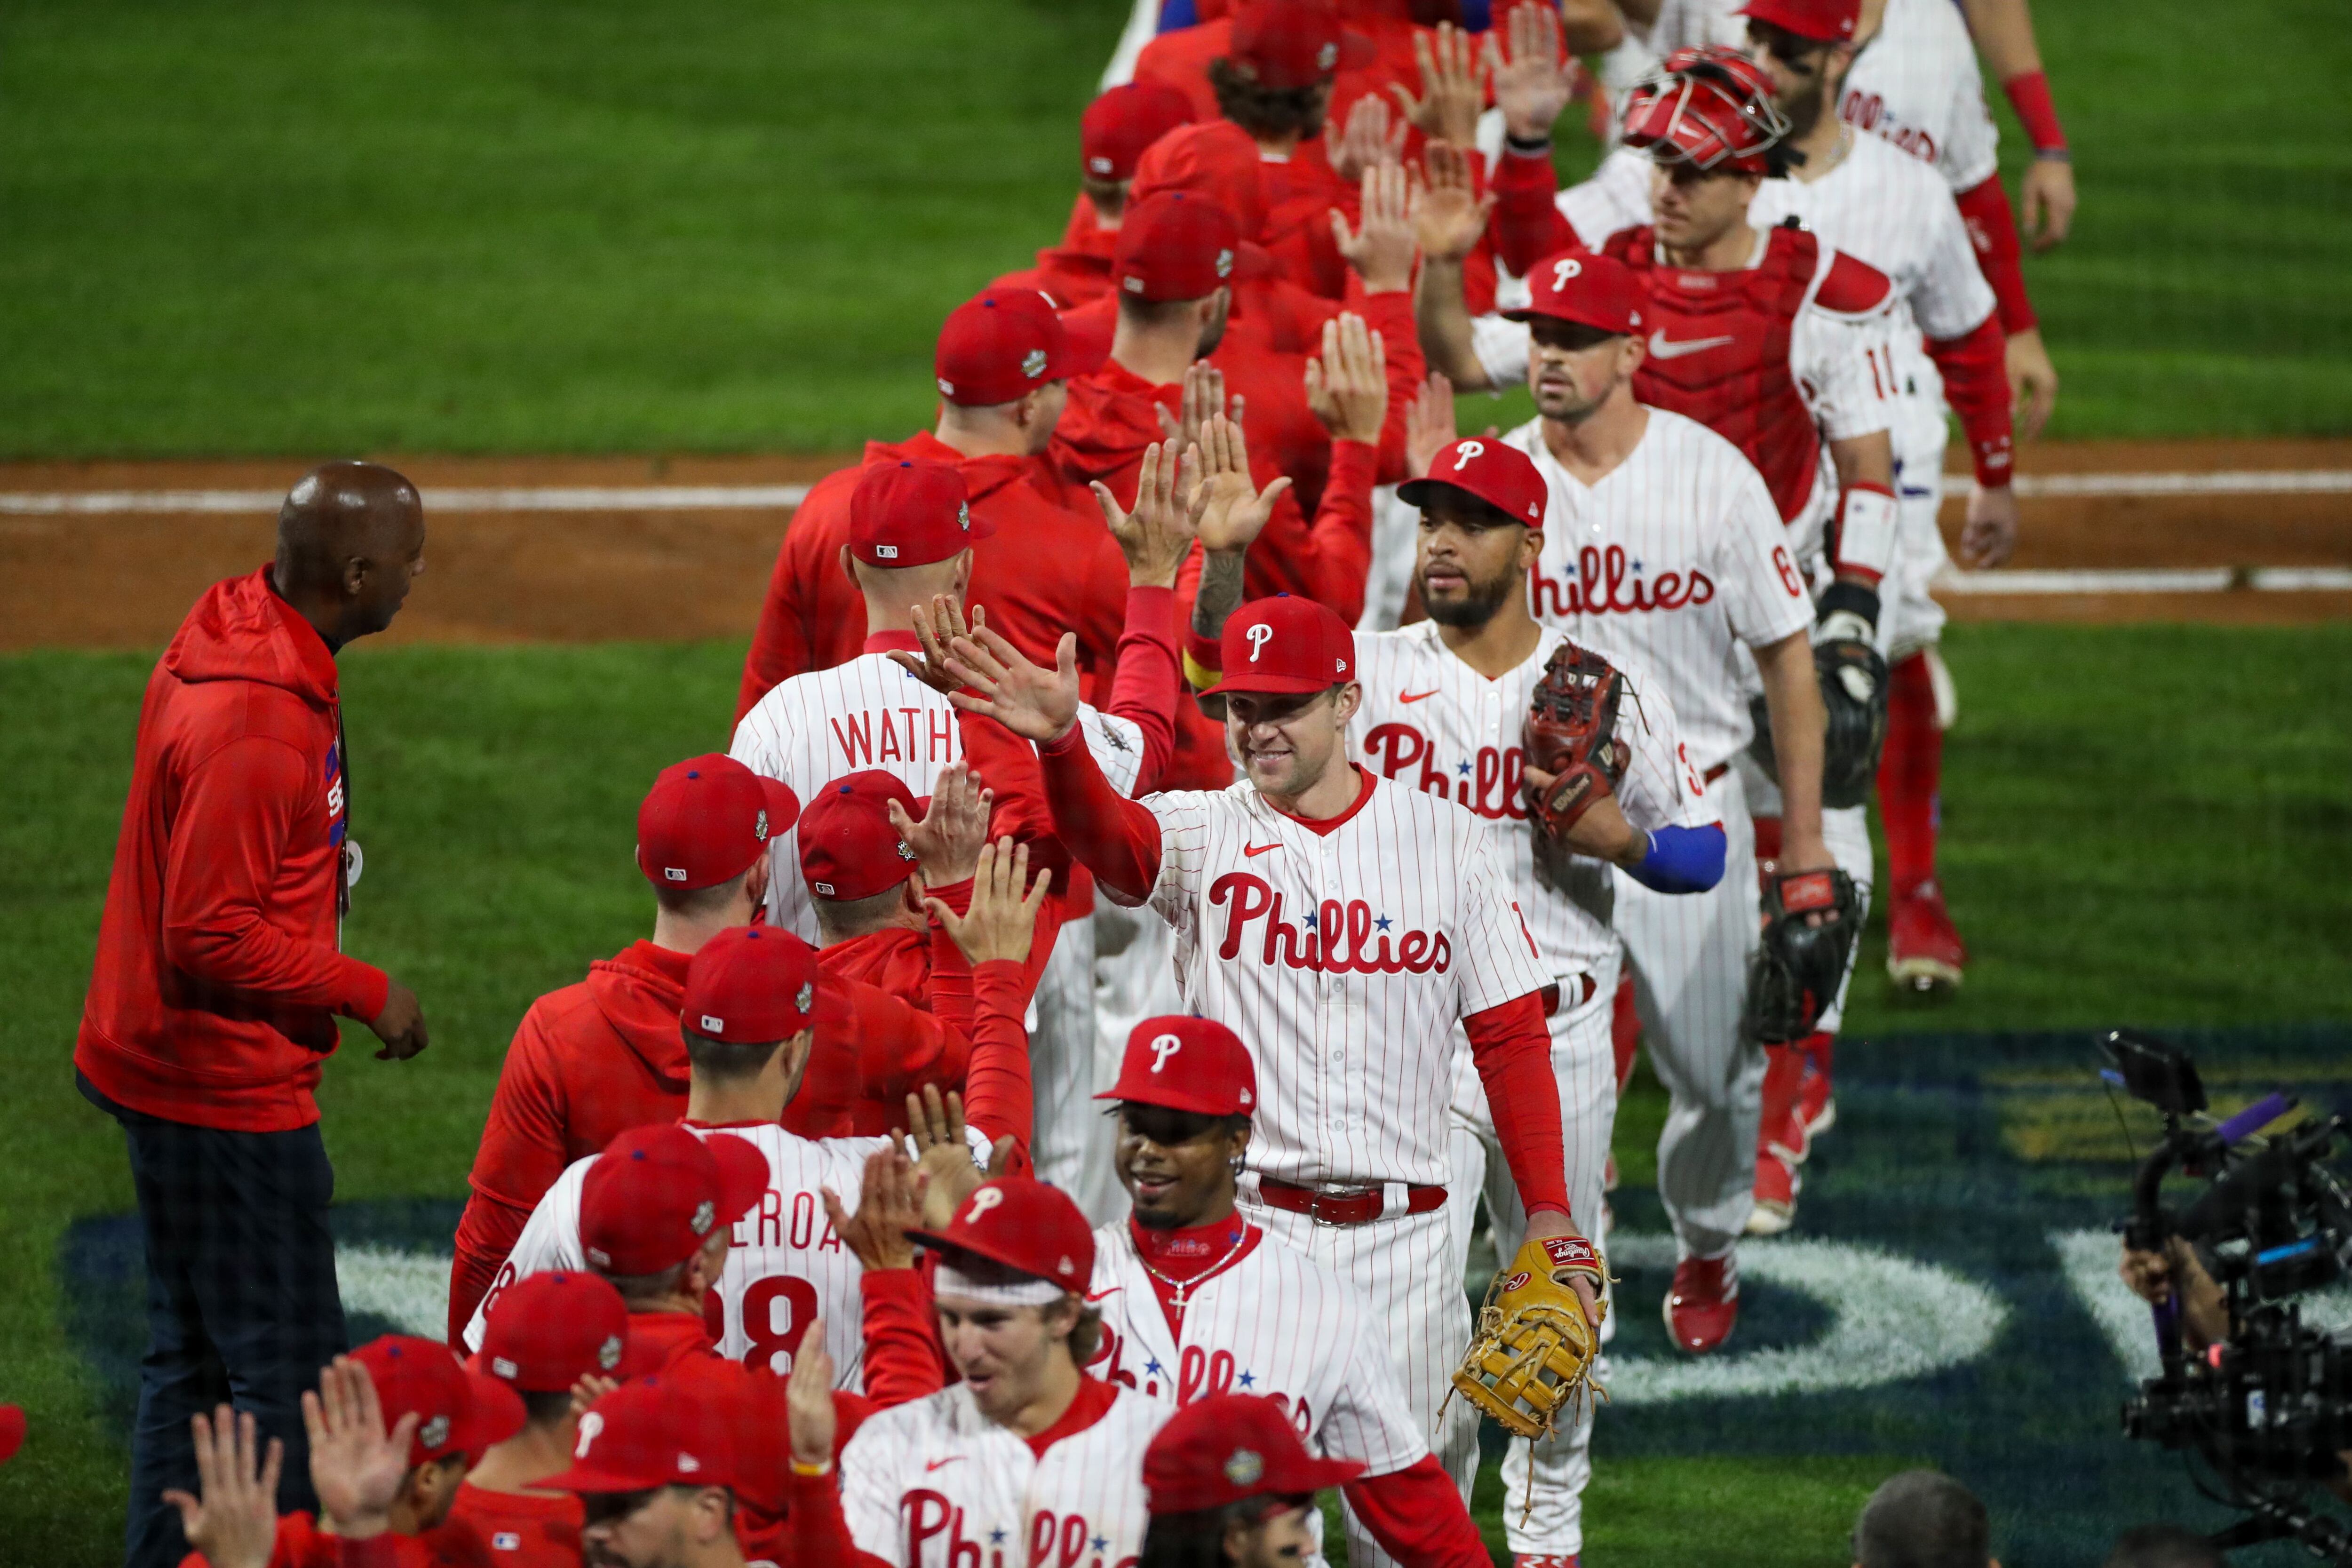 Phillies celebrate Media baseball team's Little League World Series run -  6abc Philadelphia